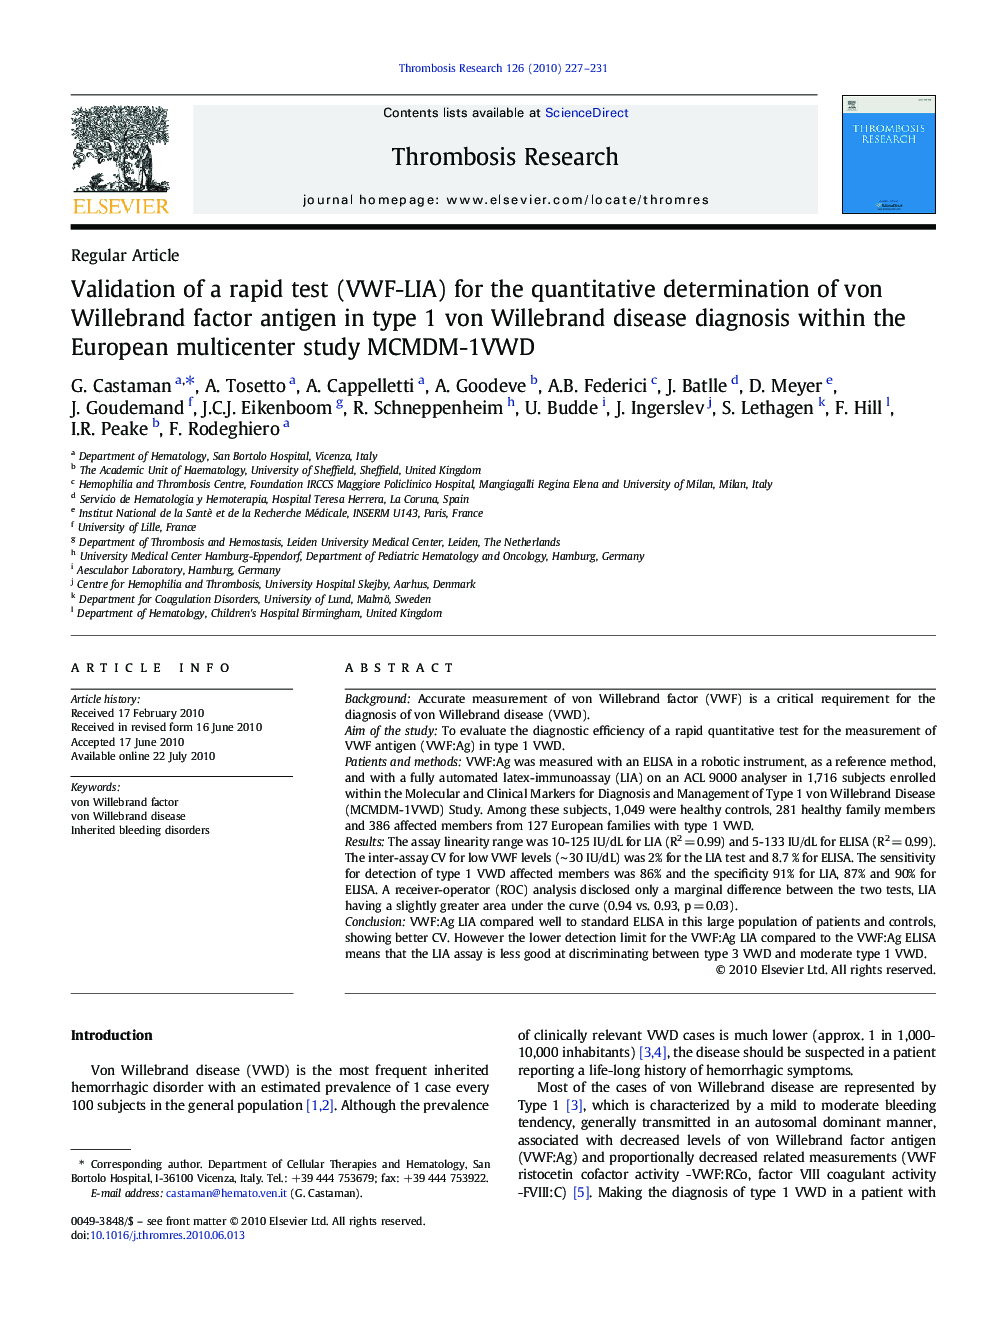 Validation of a rapid test (VWF-LIA) for the quantitative determination of von Willebrand factor antigen in type 1 von Willebrand disease diagnosis within the European multicenter study MCMDM-1VWD